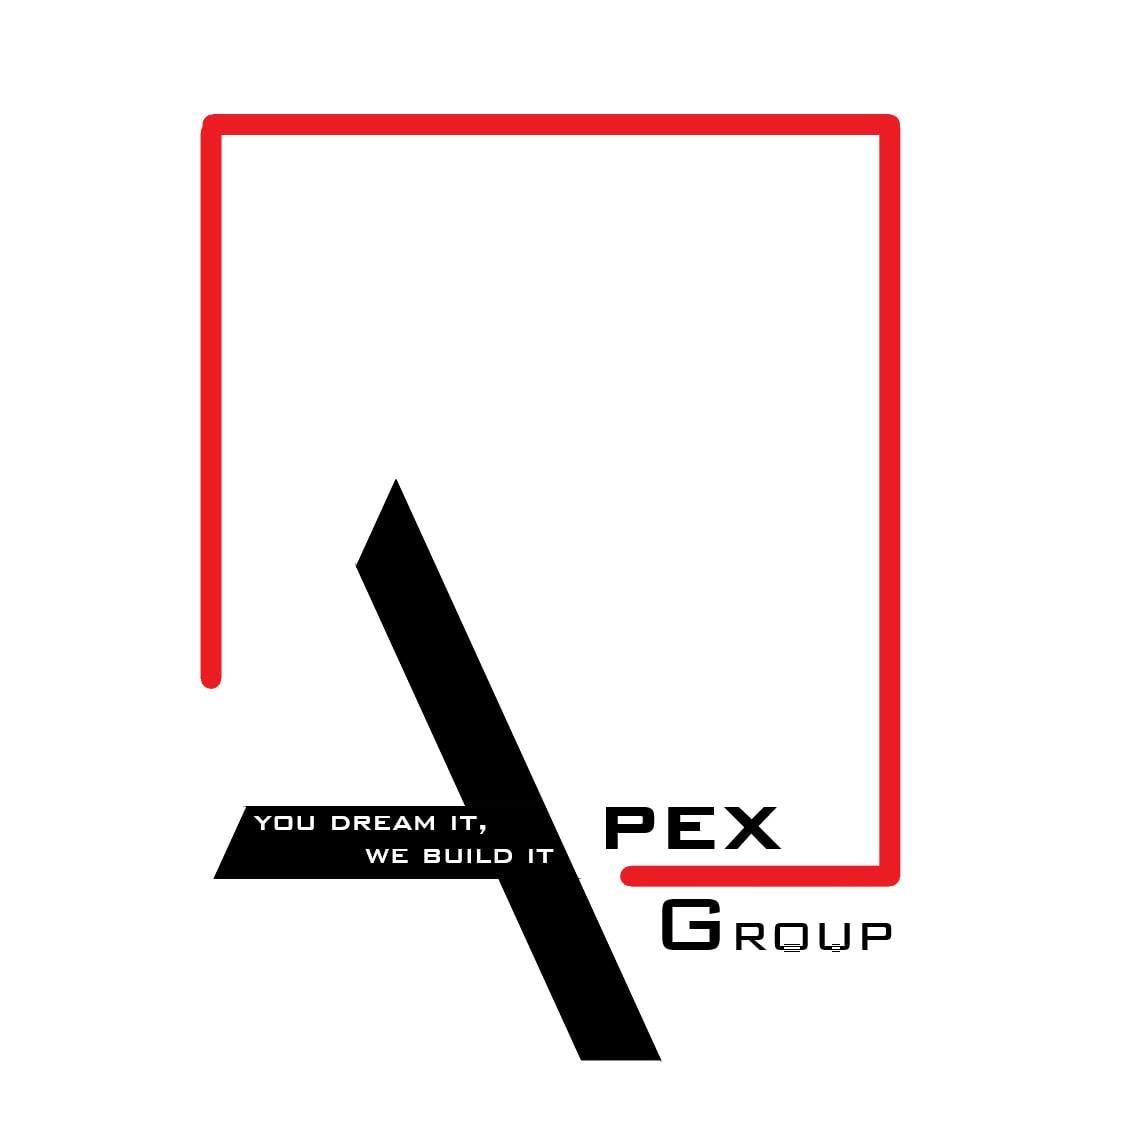 Apex Group|IT Services|Professional Services